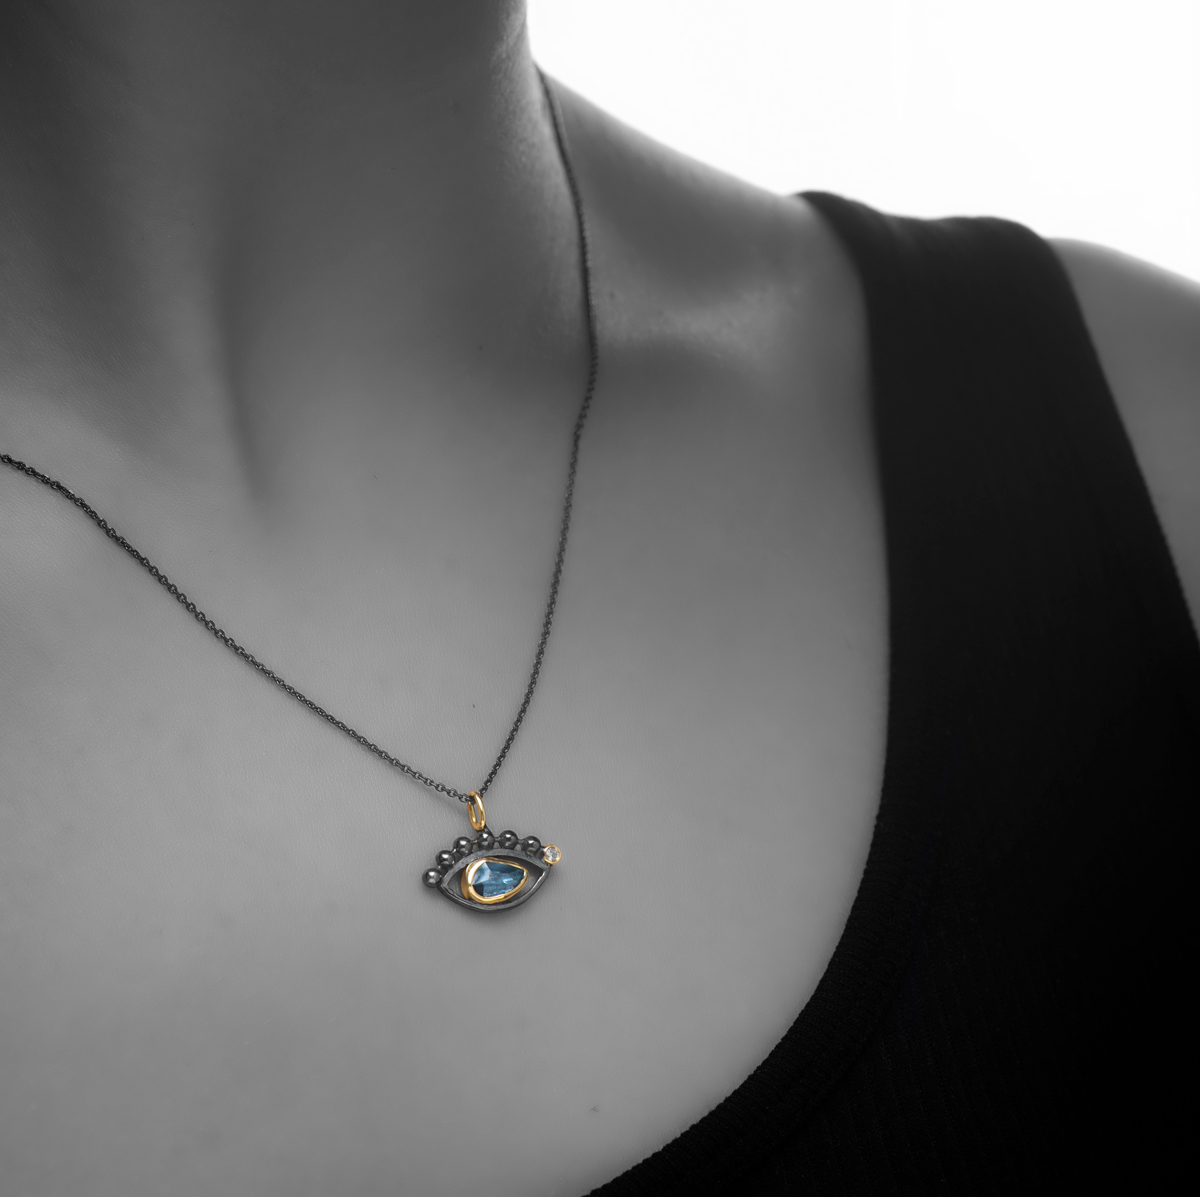 Aquamarine or Blue Topaz, Diamond, Gold & Silver eye pendant